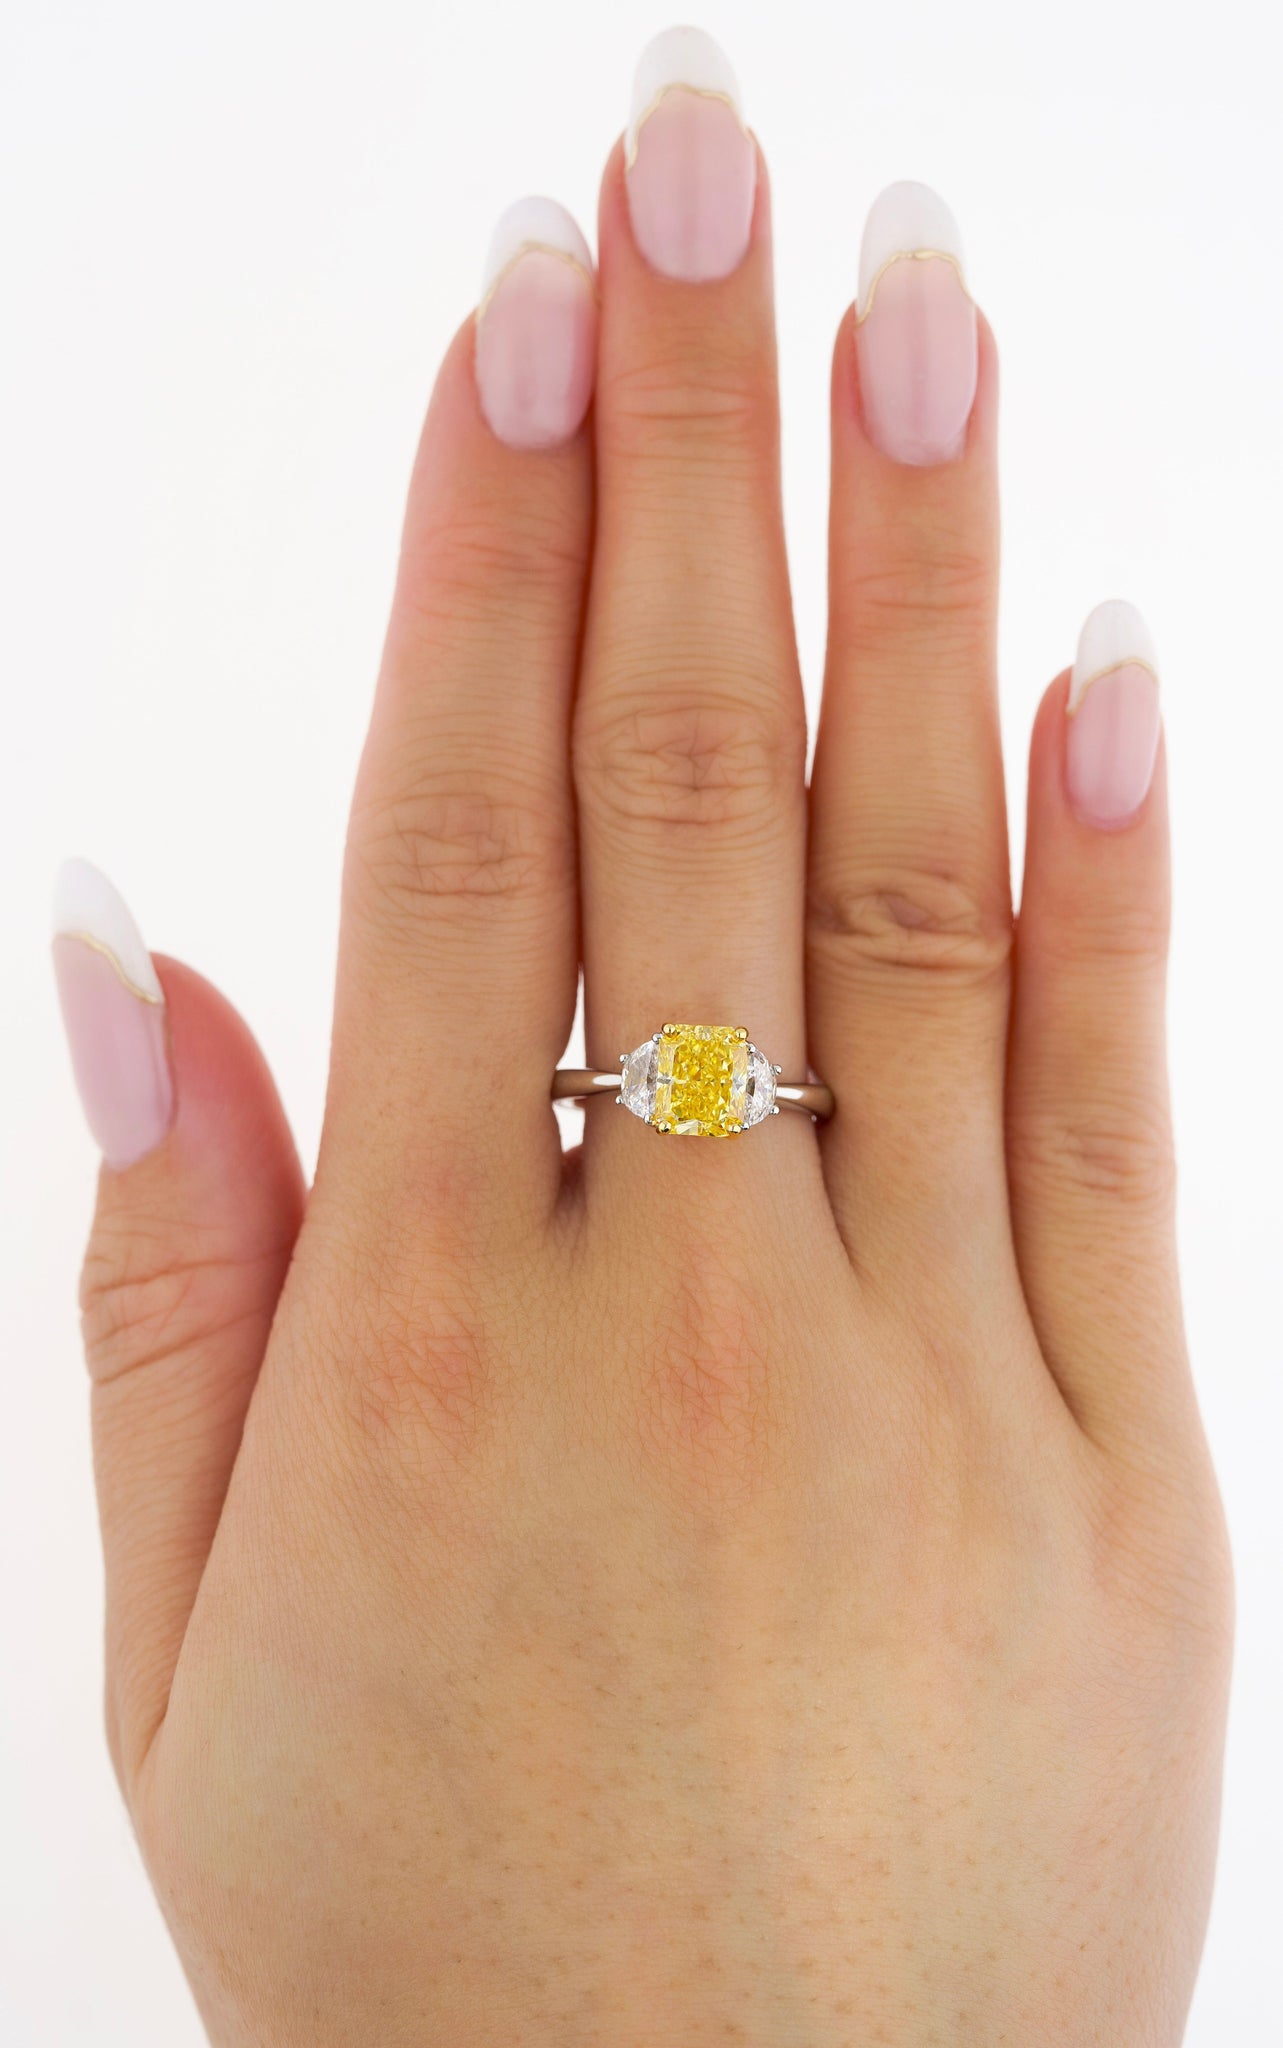 GEM'S BALLET Luxury Diamond-fire CZ- Fancy Vivid Yellow Engagement Rings  925 Sterling Silver Handmade Statement Ring - AliExpress